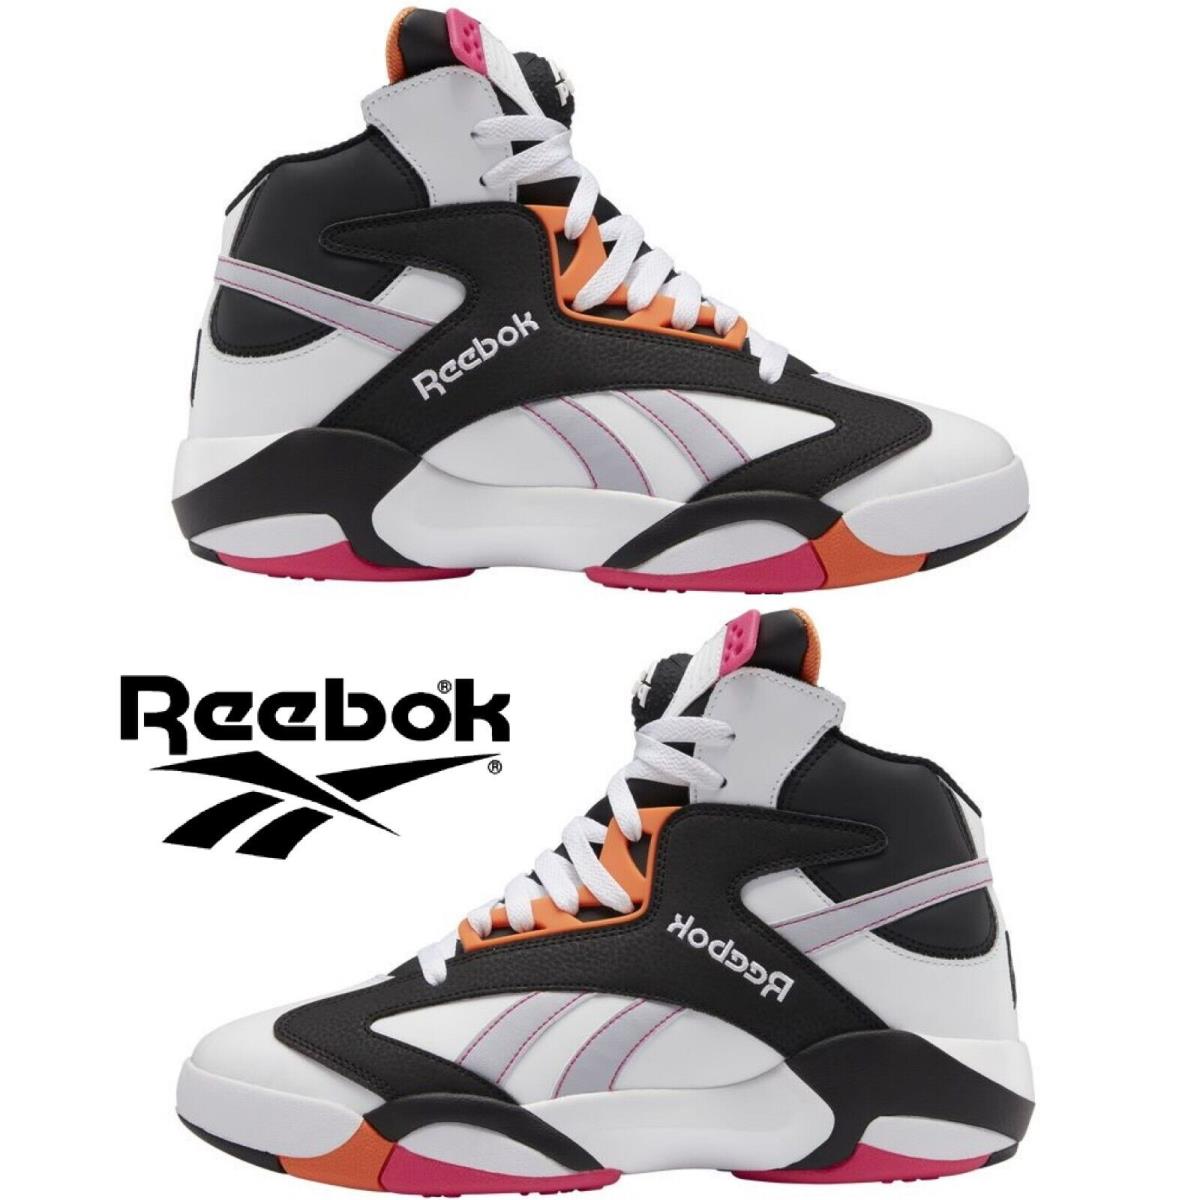 Reebok Shaq Attaq Basketball Shoes Men`s Sneakers Running Casual Sport Black